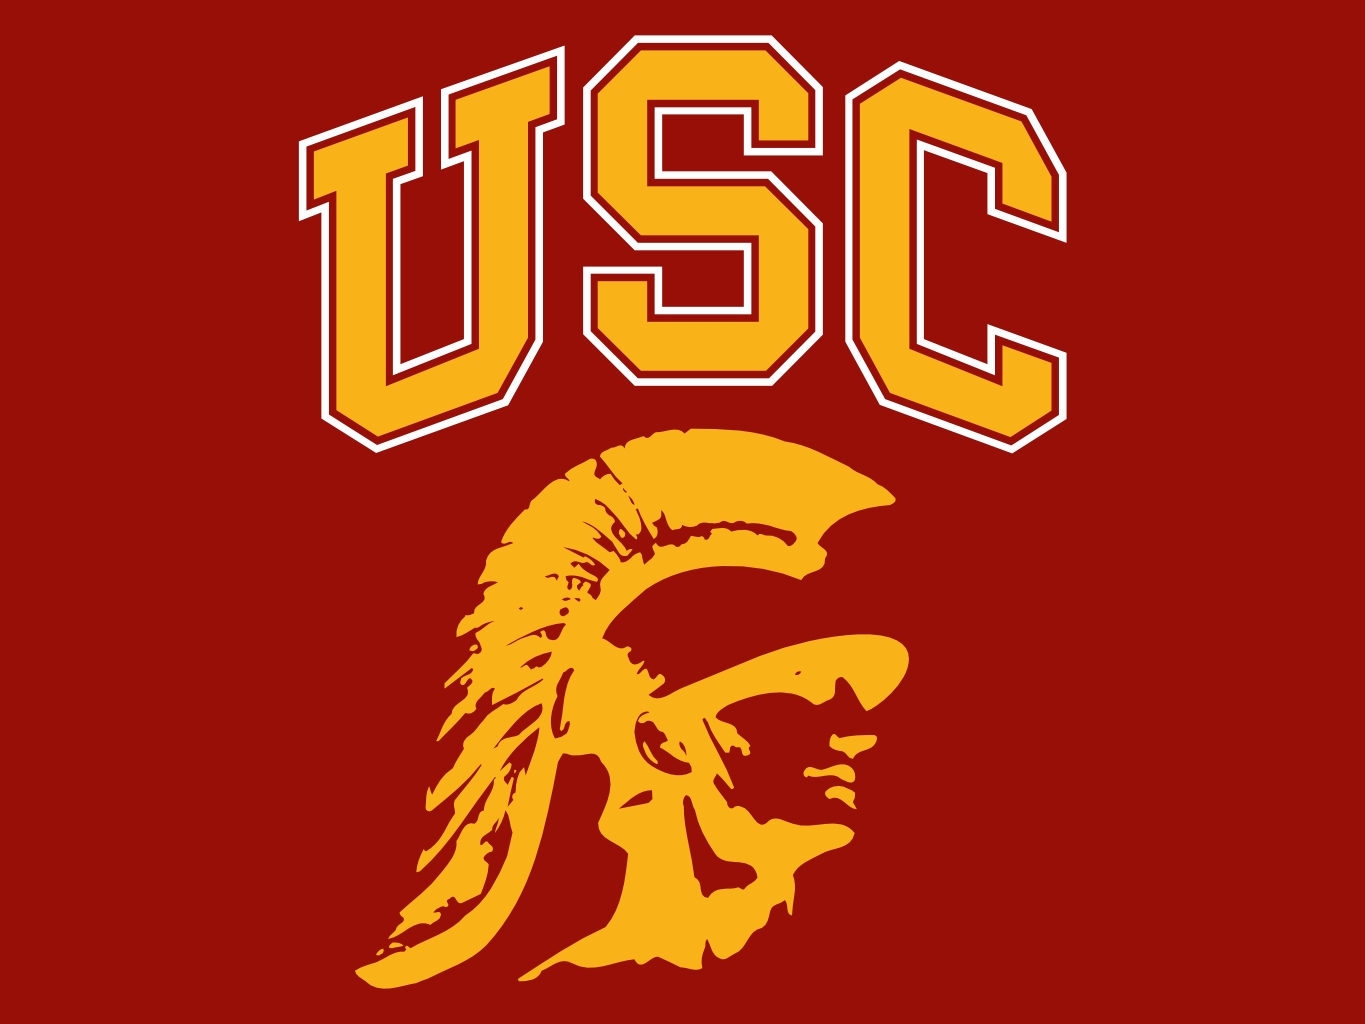 USC 